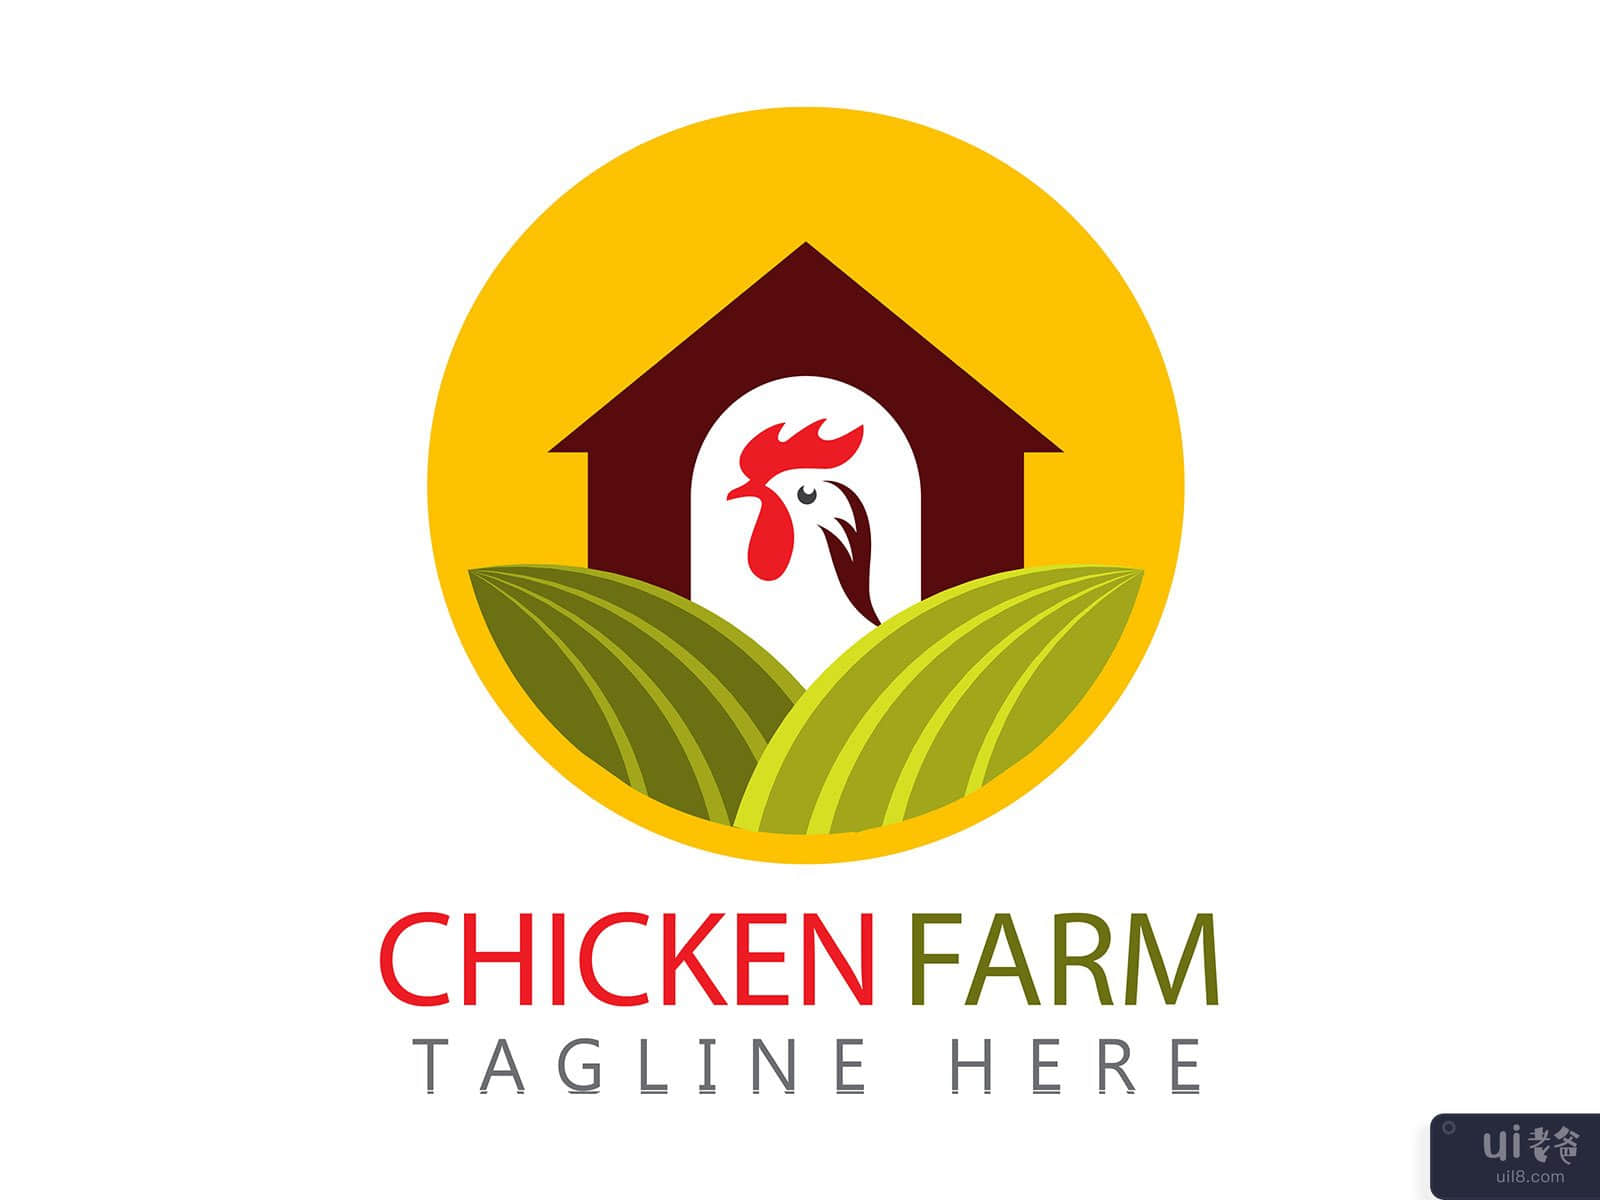 Chicken farm logo template